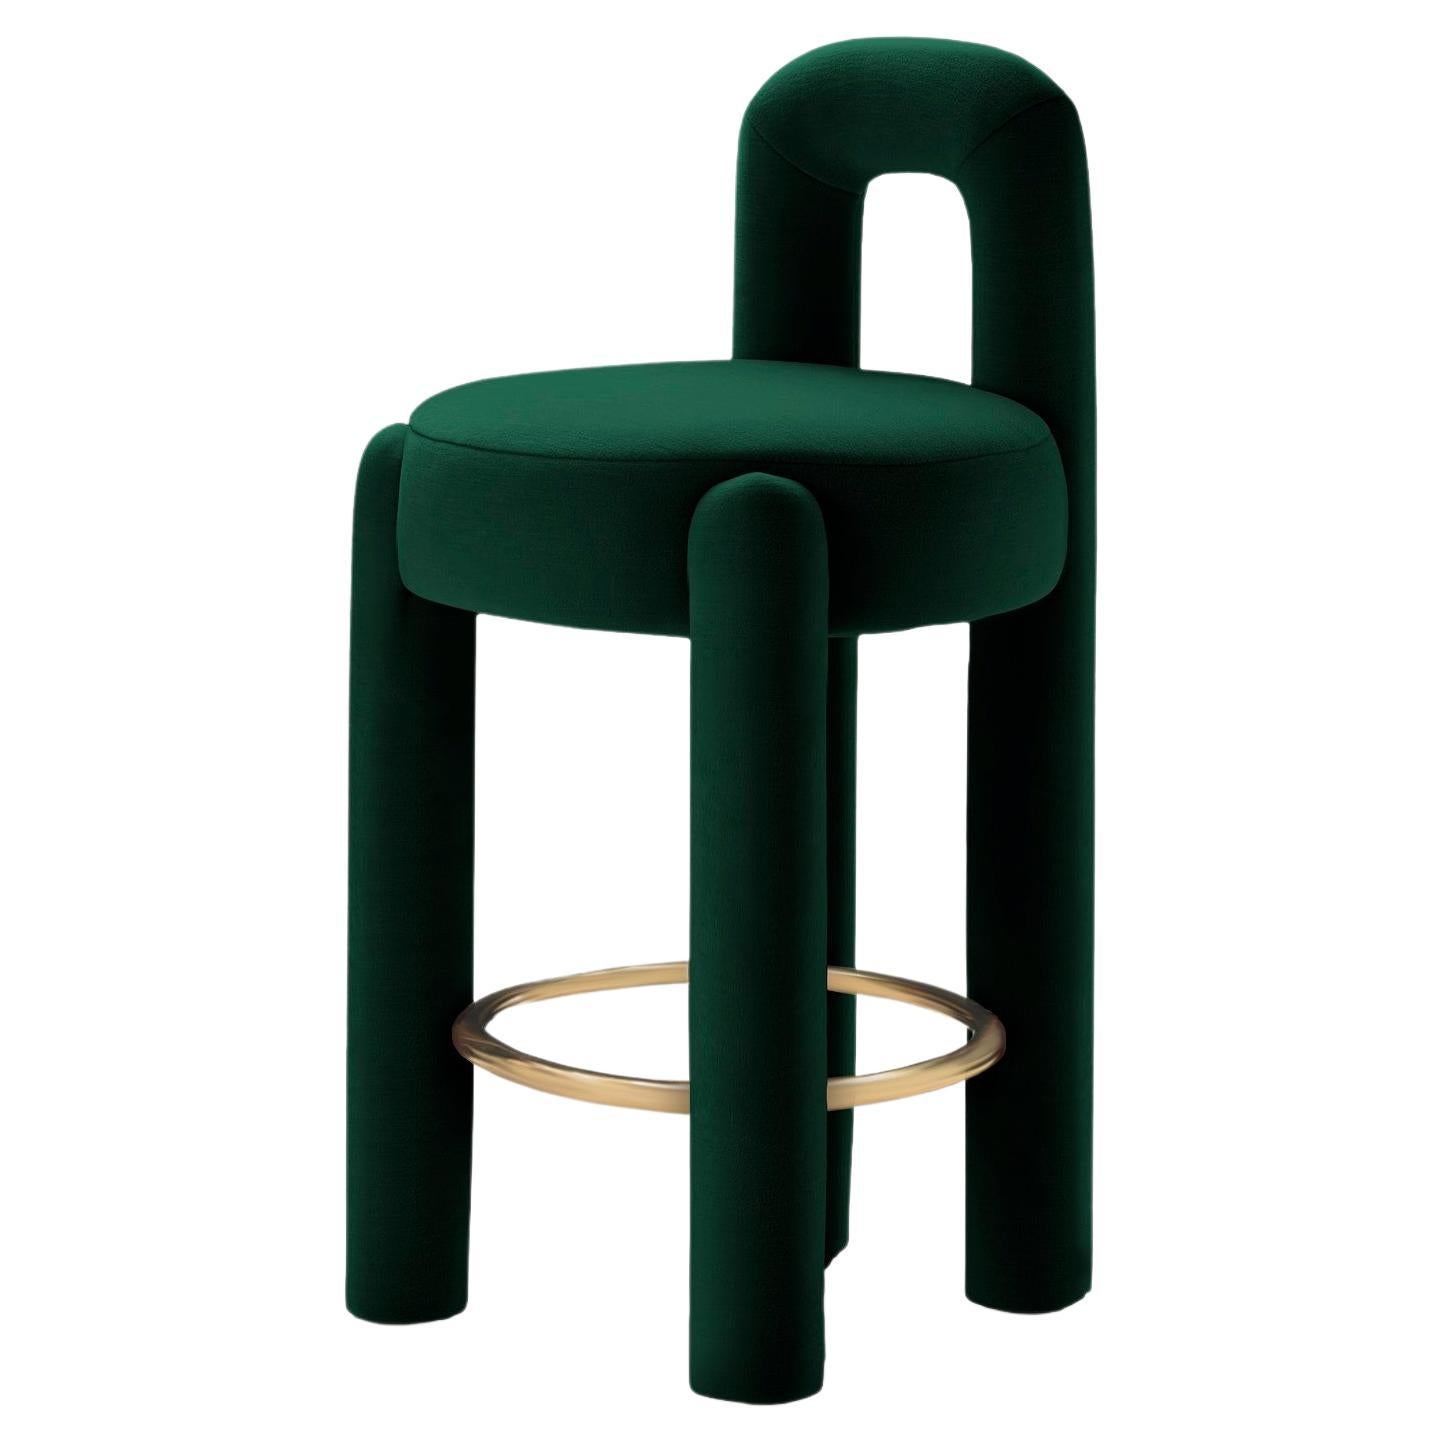 DOOQ! Organic Modern Marlon Bar Chair in Teal Kvadrat by P. Franceschini